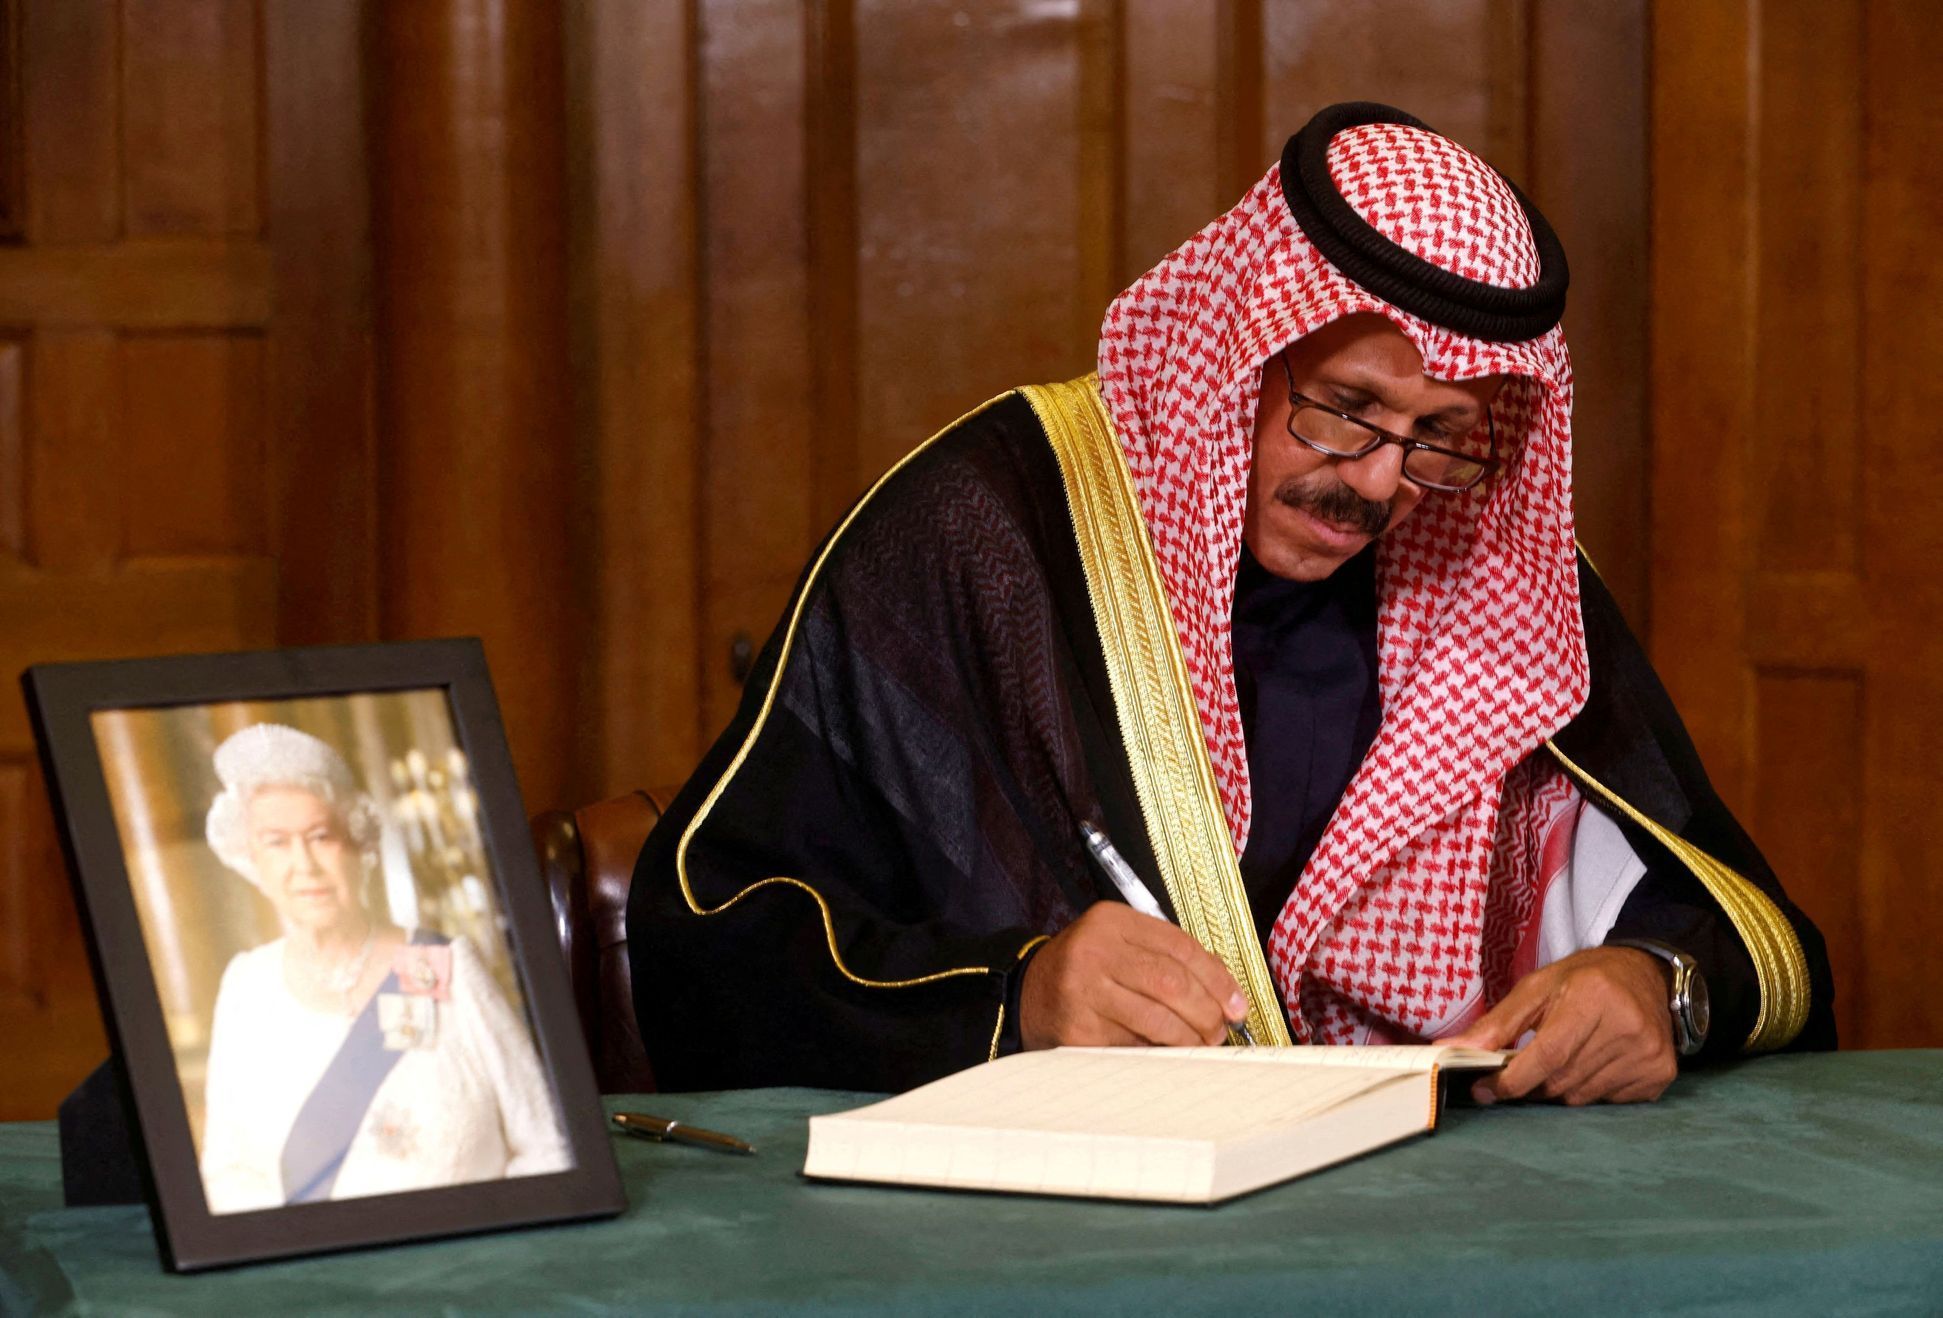 Kuvajtský emír šajch Navaf Ahmad Džábir Sabah